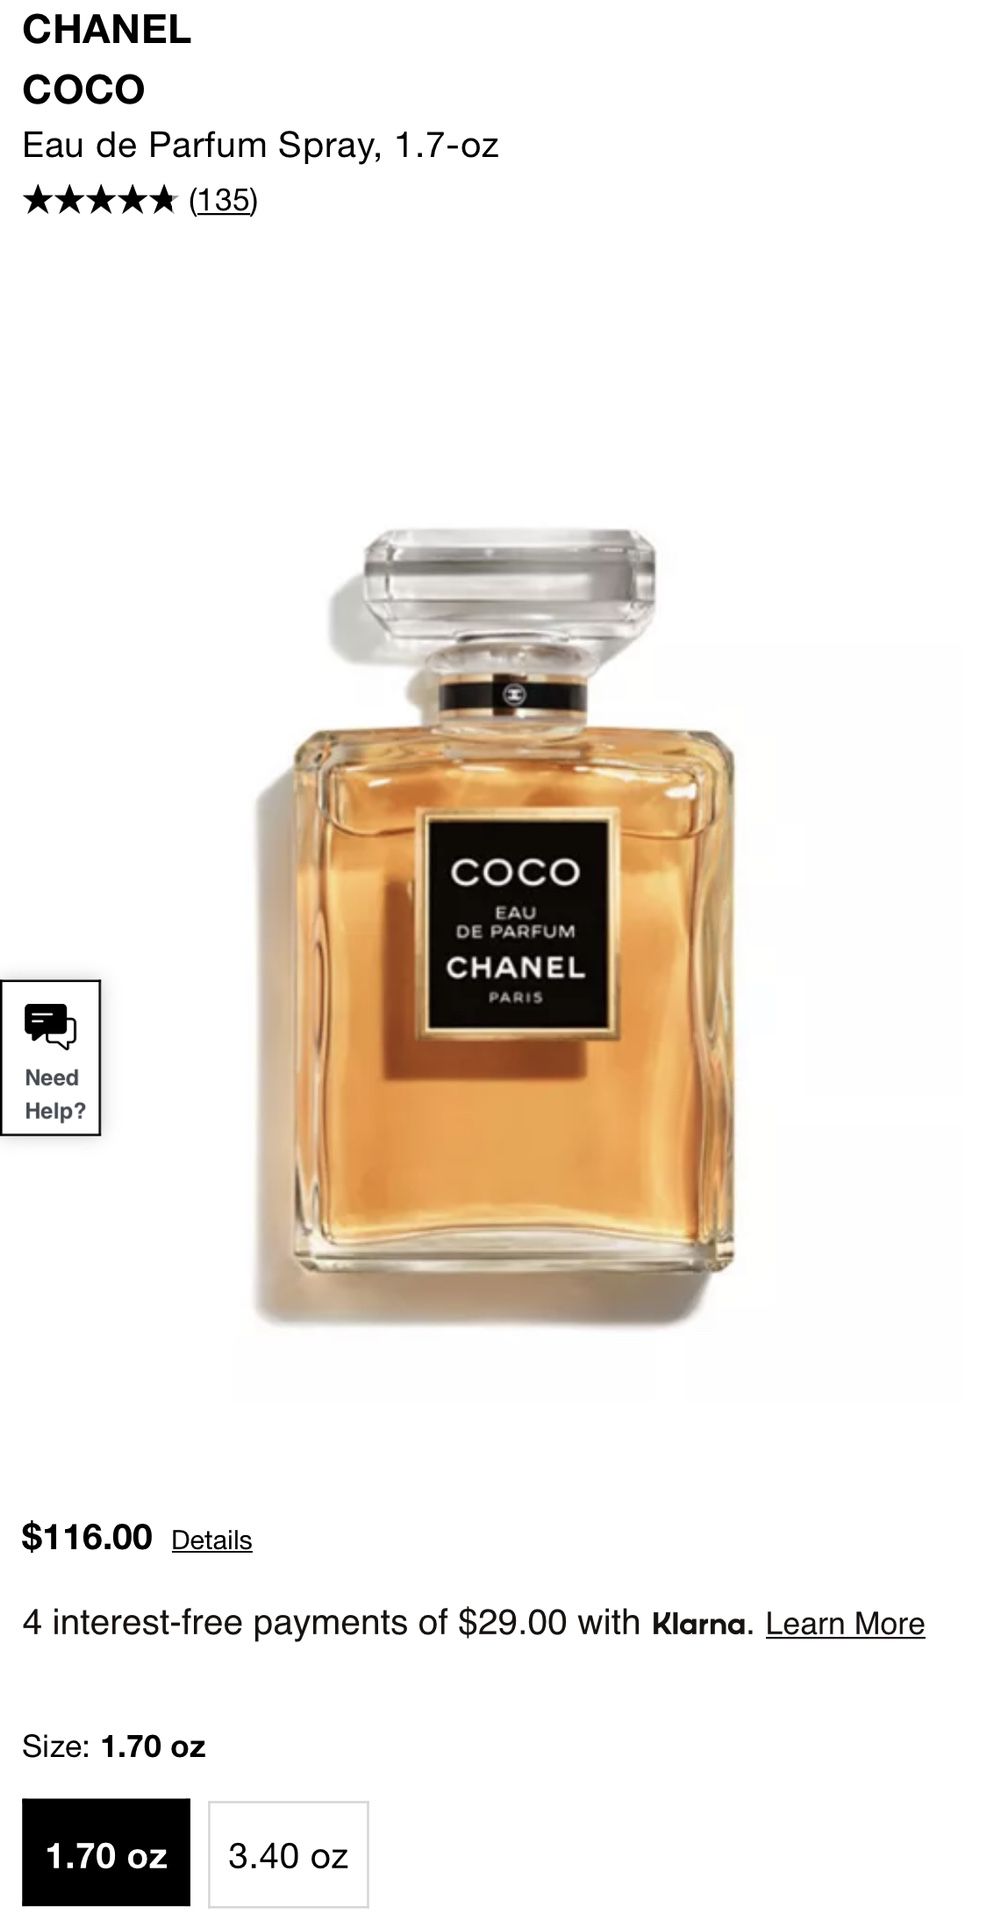 CHANEL COCO Eau de Parfum 1.7oz *NEW IN BOX* for Sale in Irvine, CA -  OfferUp